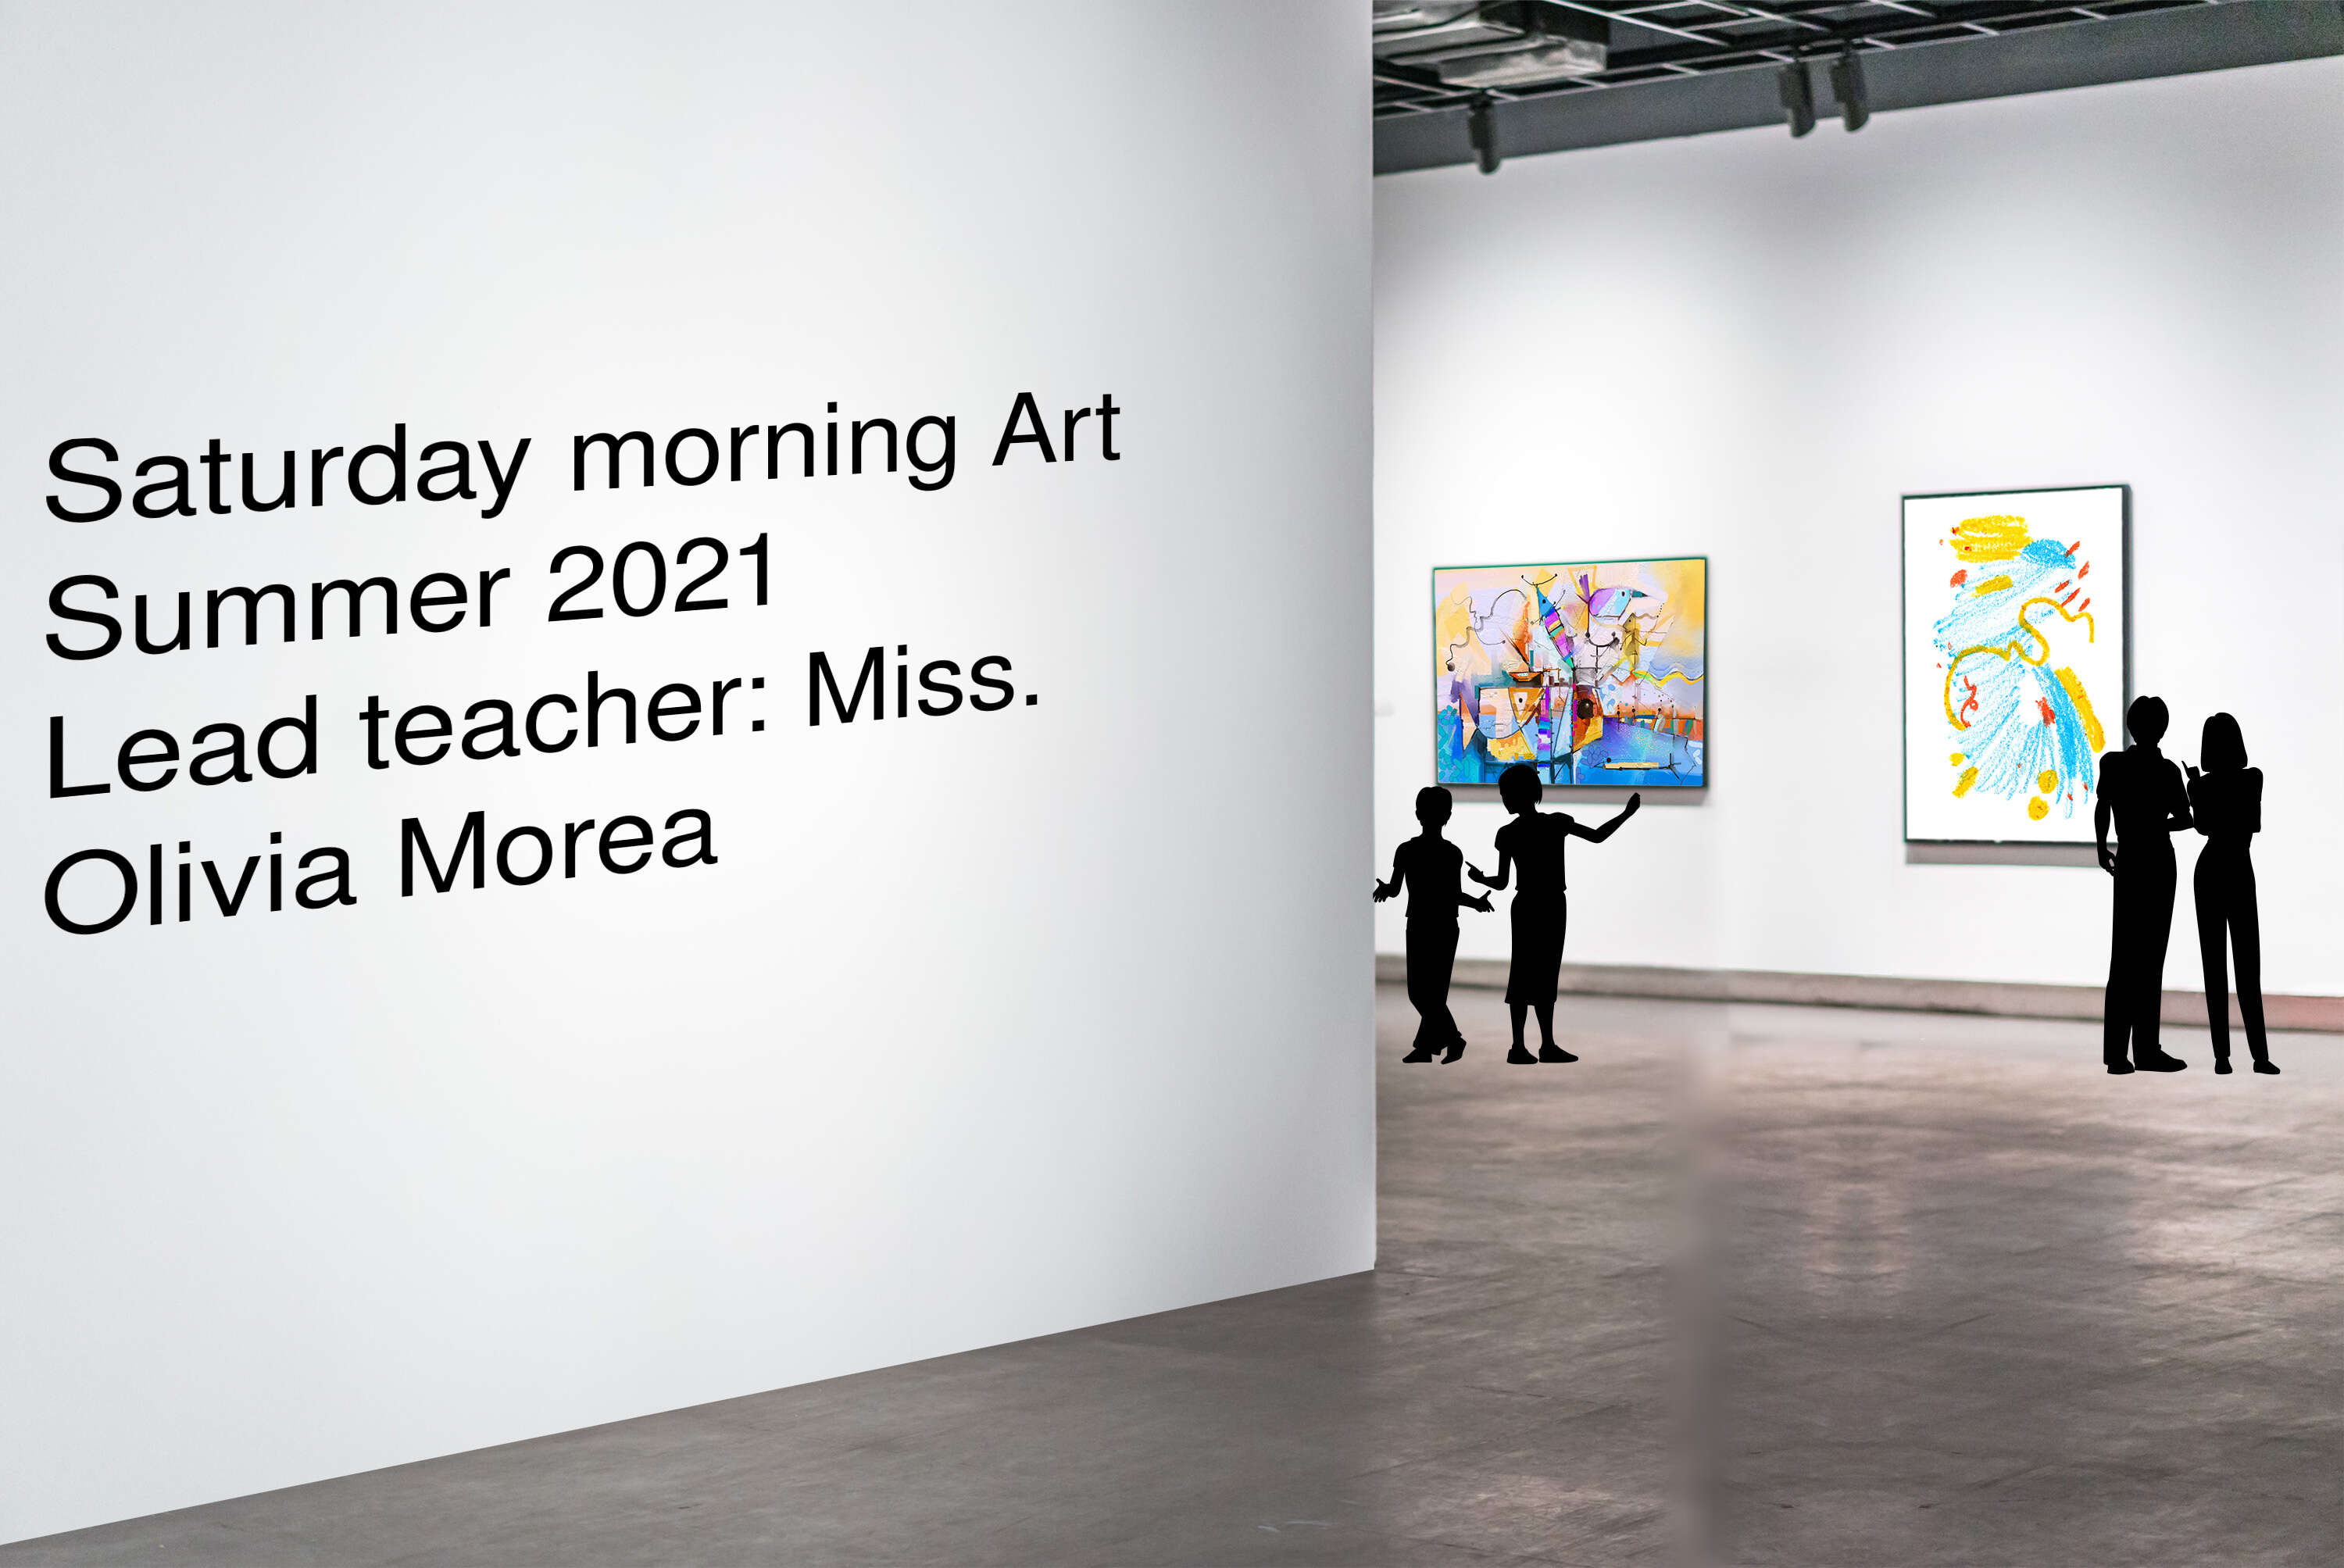 Saturday morning Art
Summer 2021
Lead teacher: Miss. Olivia Morea